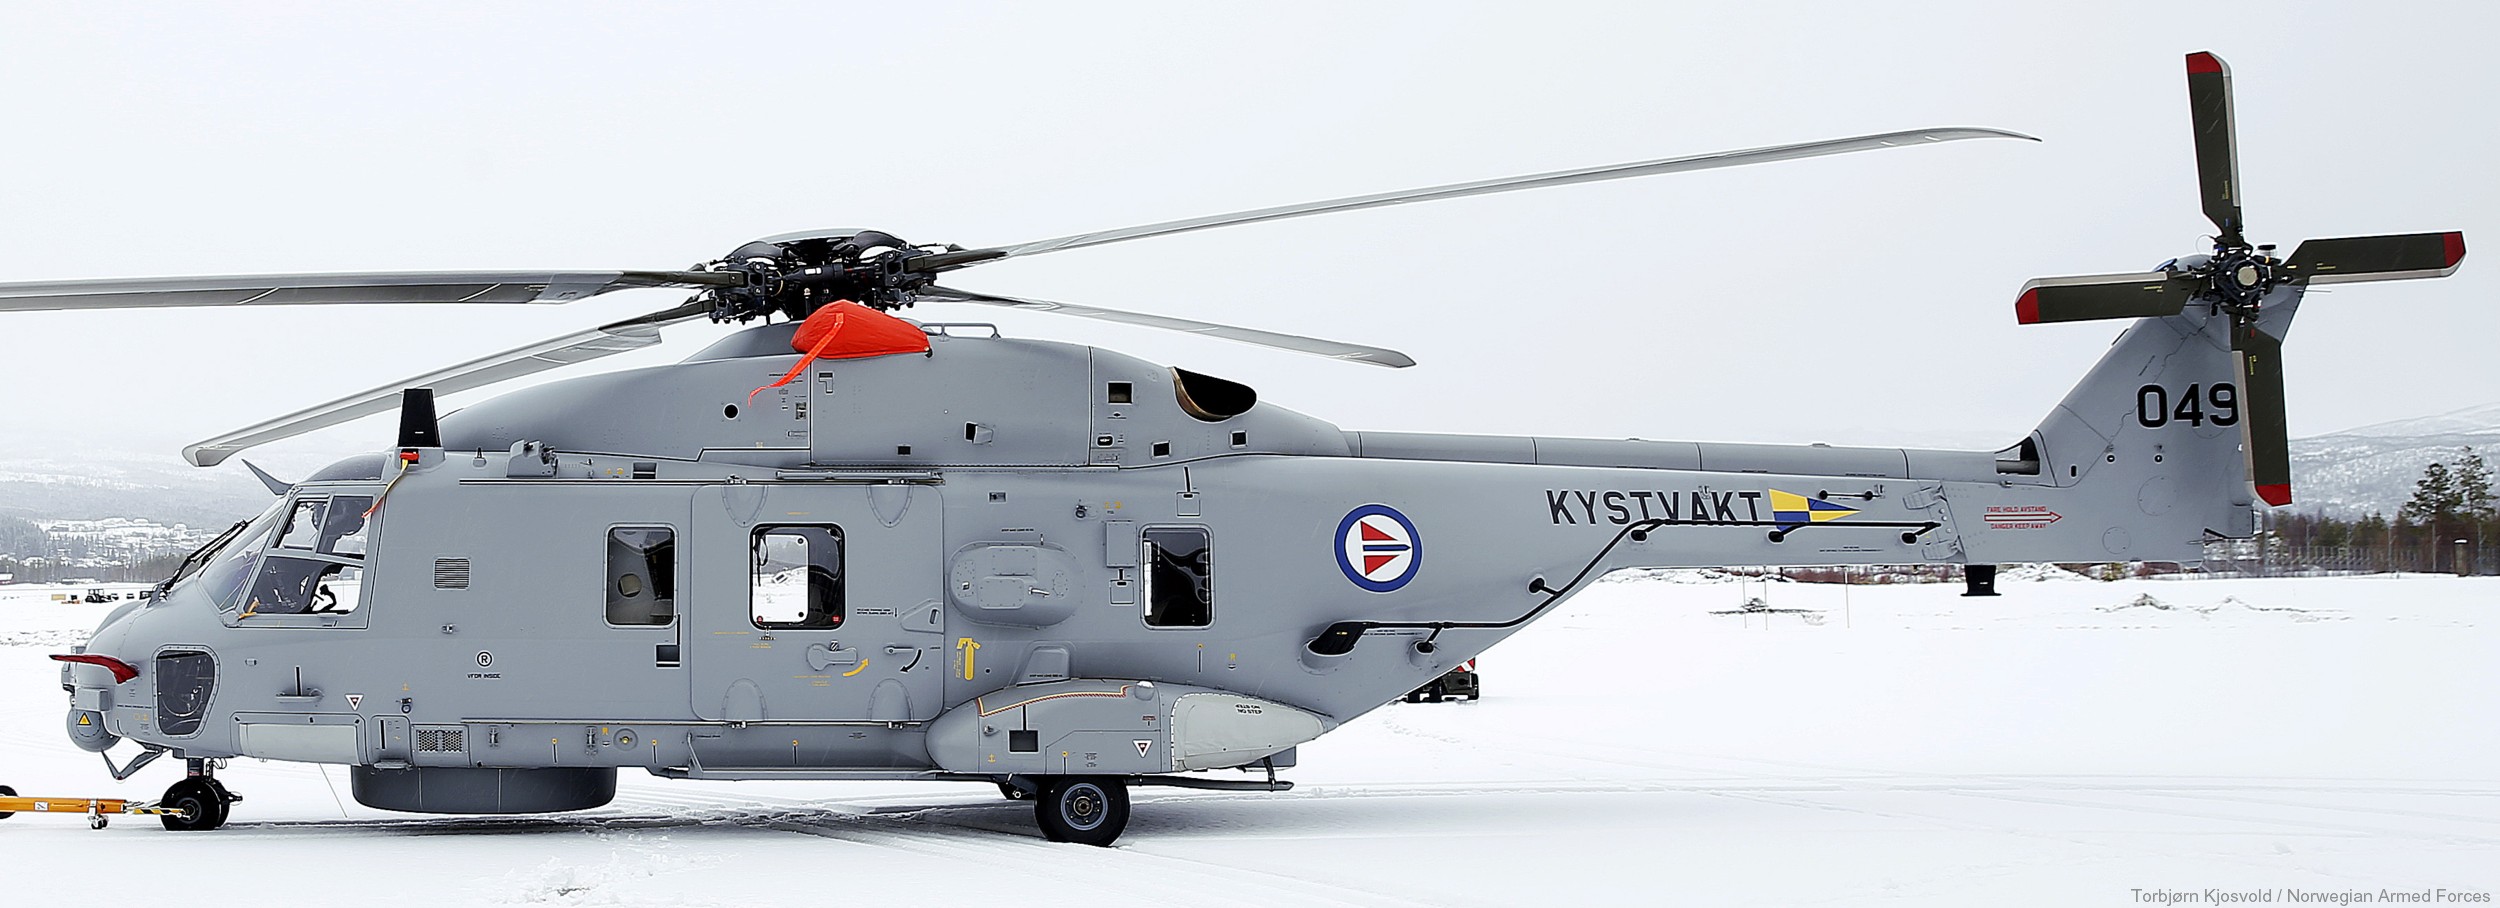 nh90 nfh asw helicopter royal norwegian coast guard navy air force kystvakt sjoforsvaret 049 07